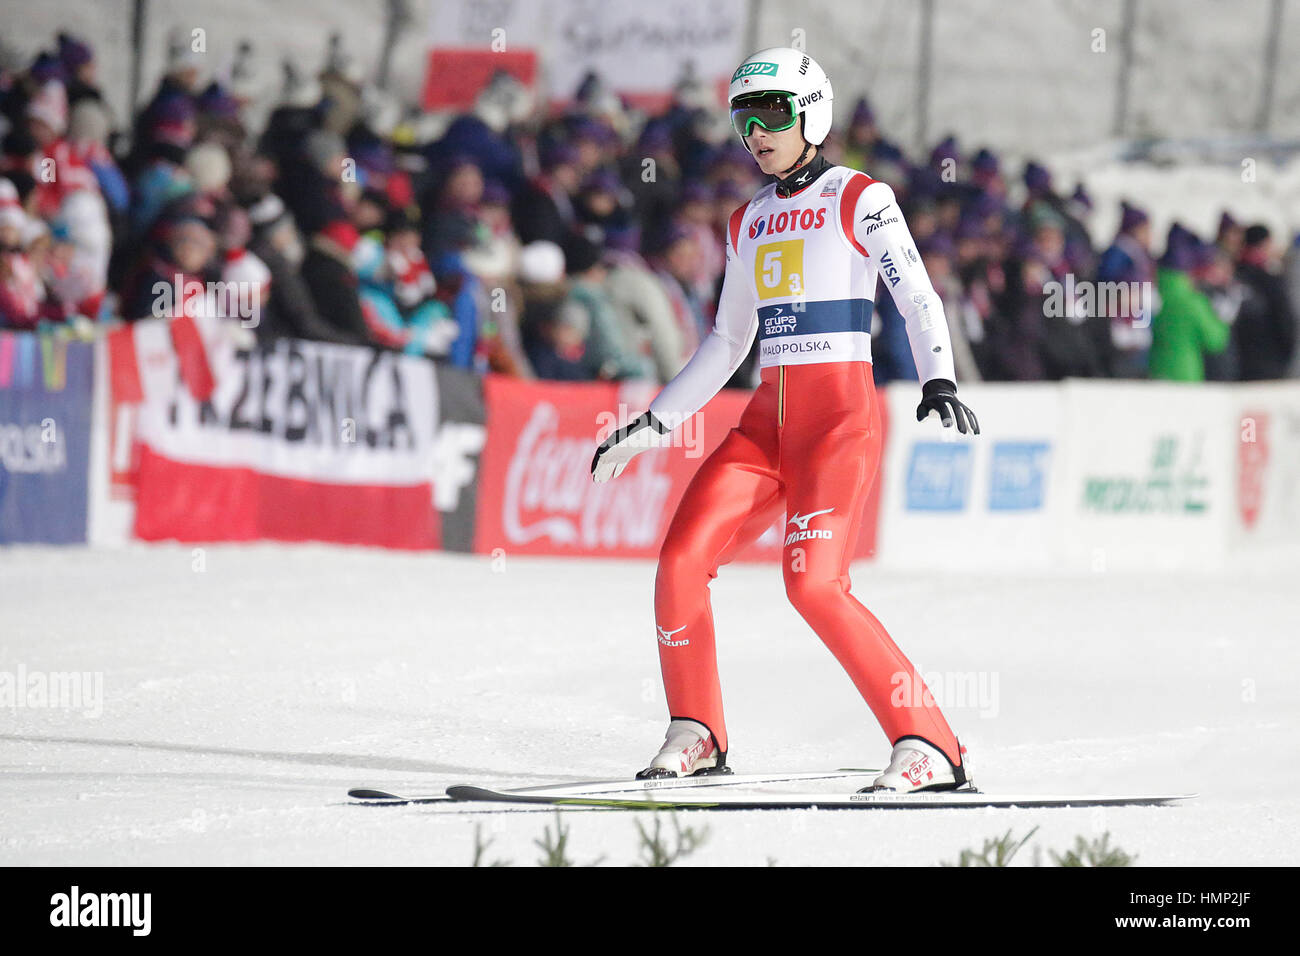 ZAKOPANE, Polen - 23. Januar 2016: FIS-Skisprung-Weltcup in Zakopane o/p Kenshiro Ito jap. Stockfoto